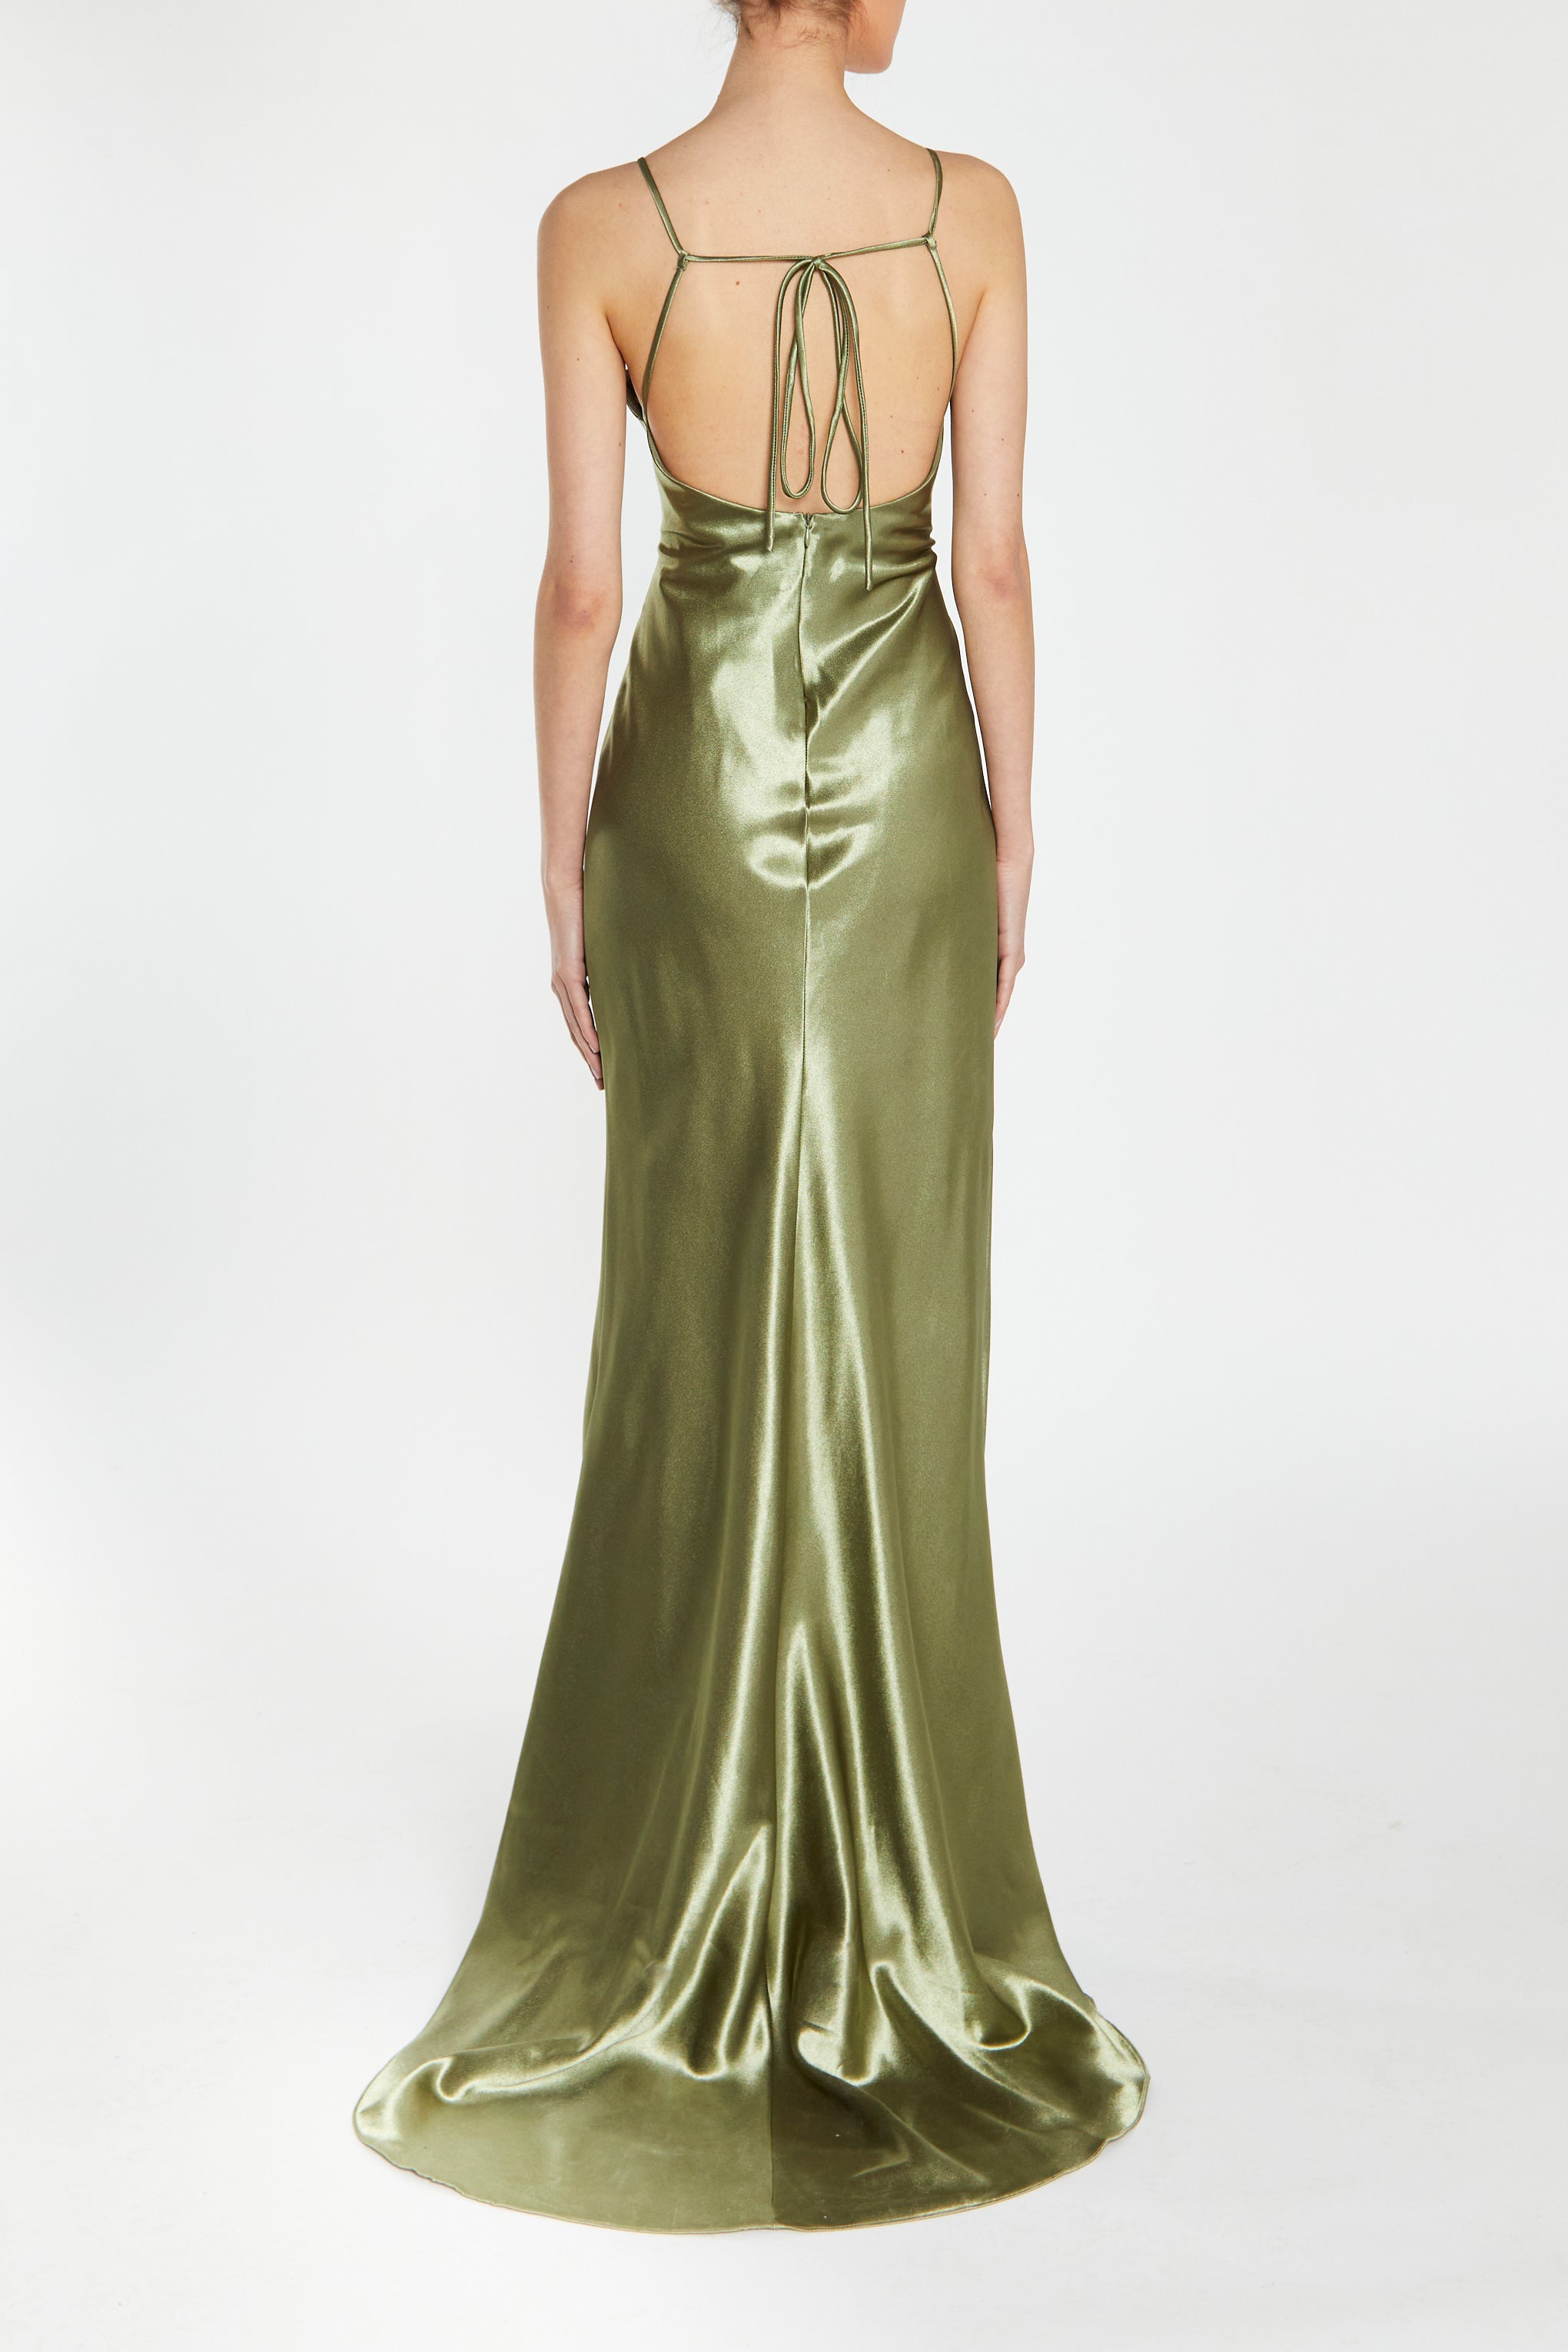 Pippa Sage Green Bridesmaid Cowl-Neck Slip Dress-image-3